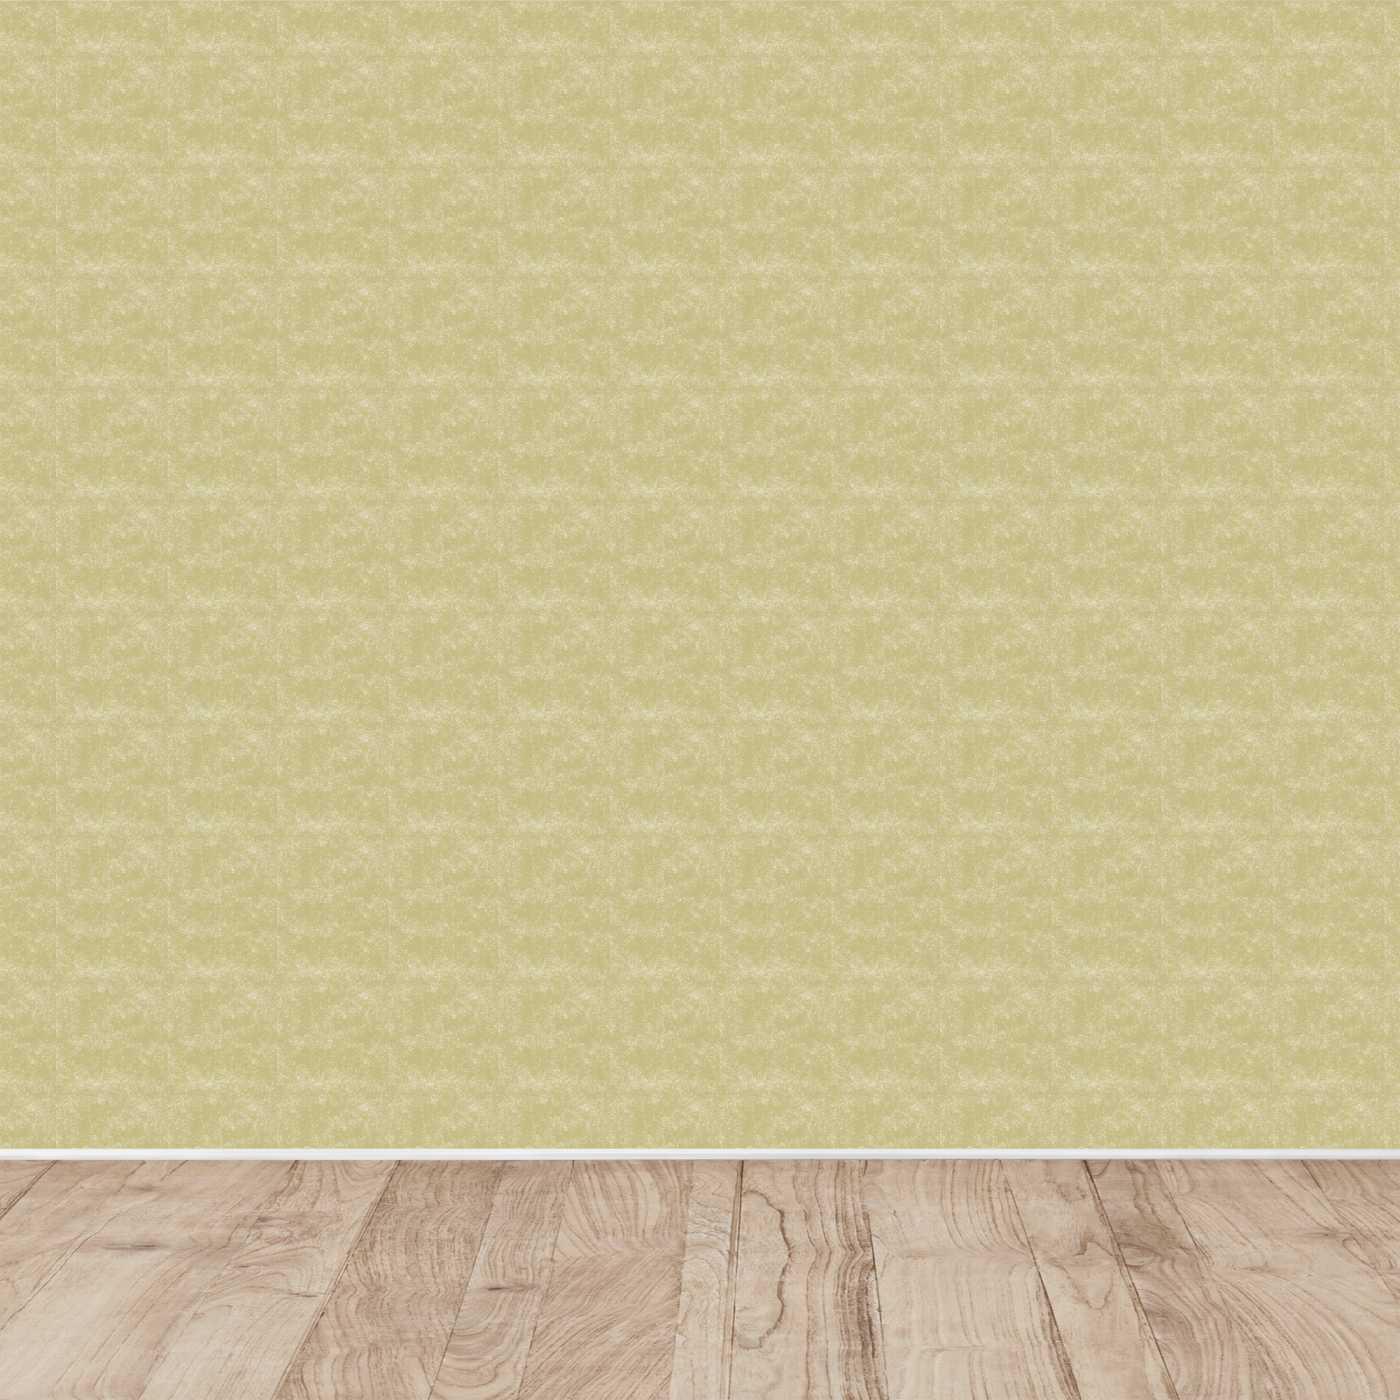 seamless wall tile pattern design 02 mock up 01 777